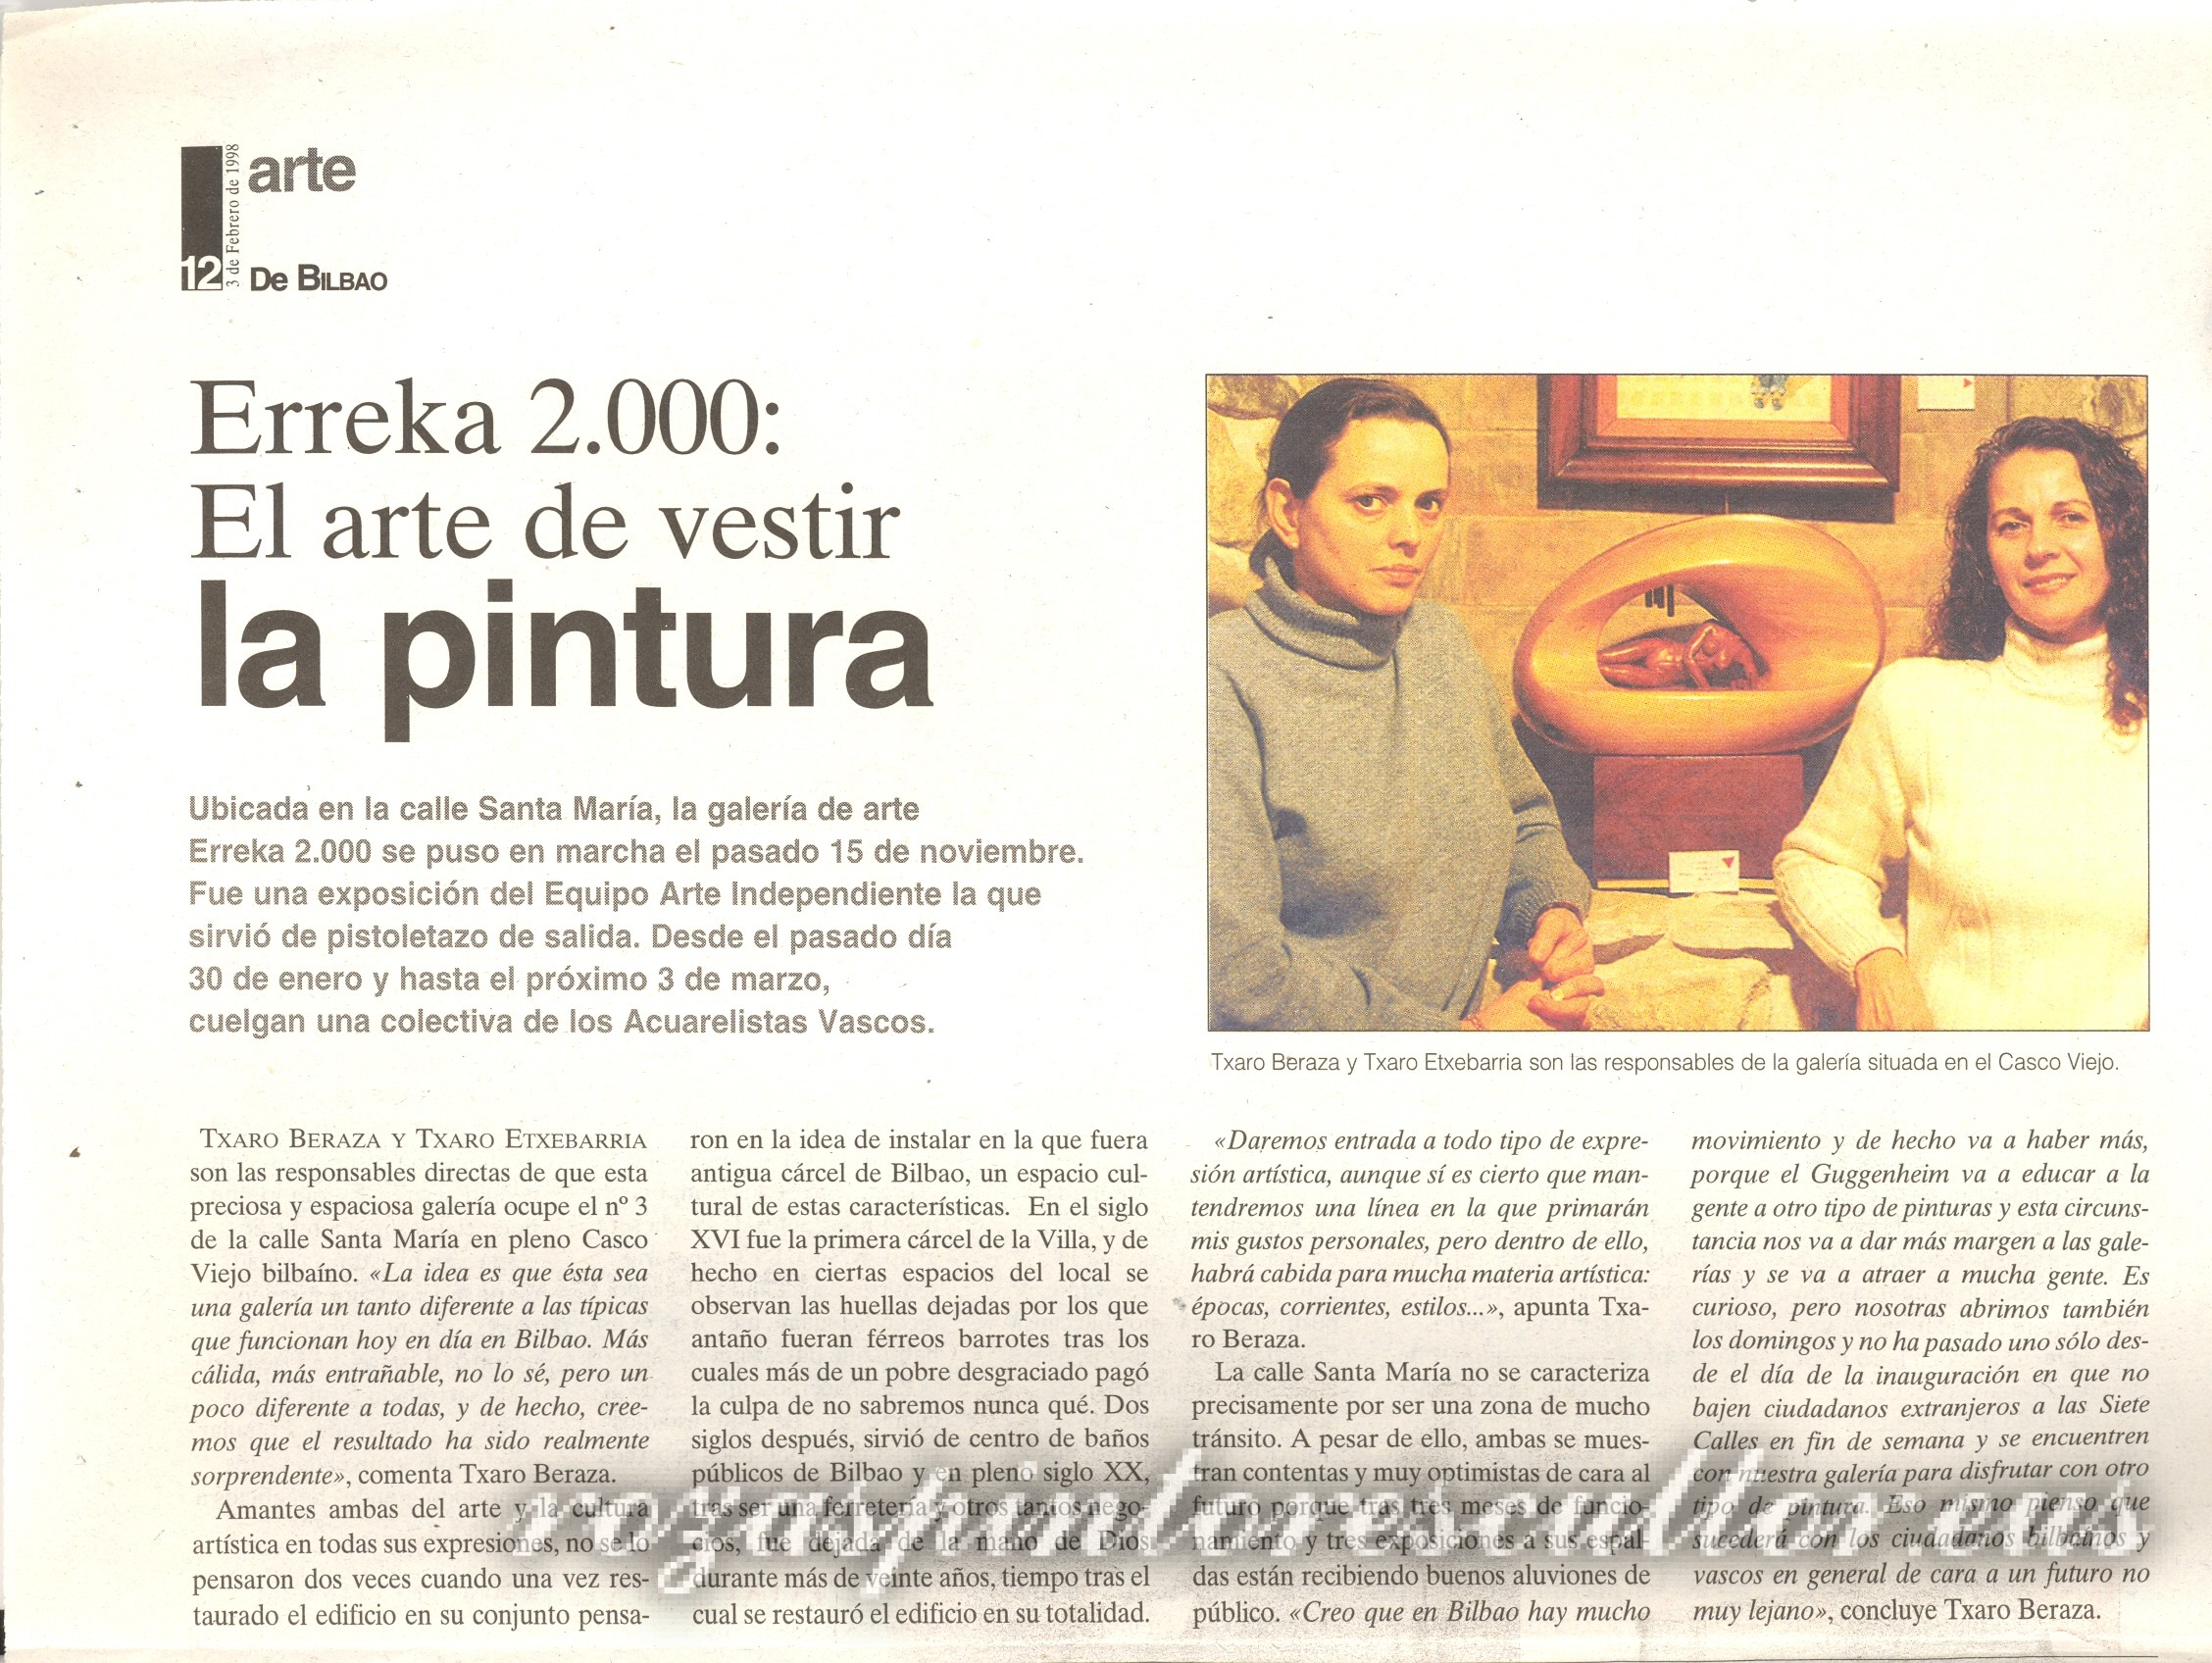 1998 Bilbao – Erreka 2000: The art of dressing painting